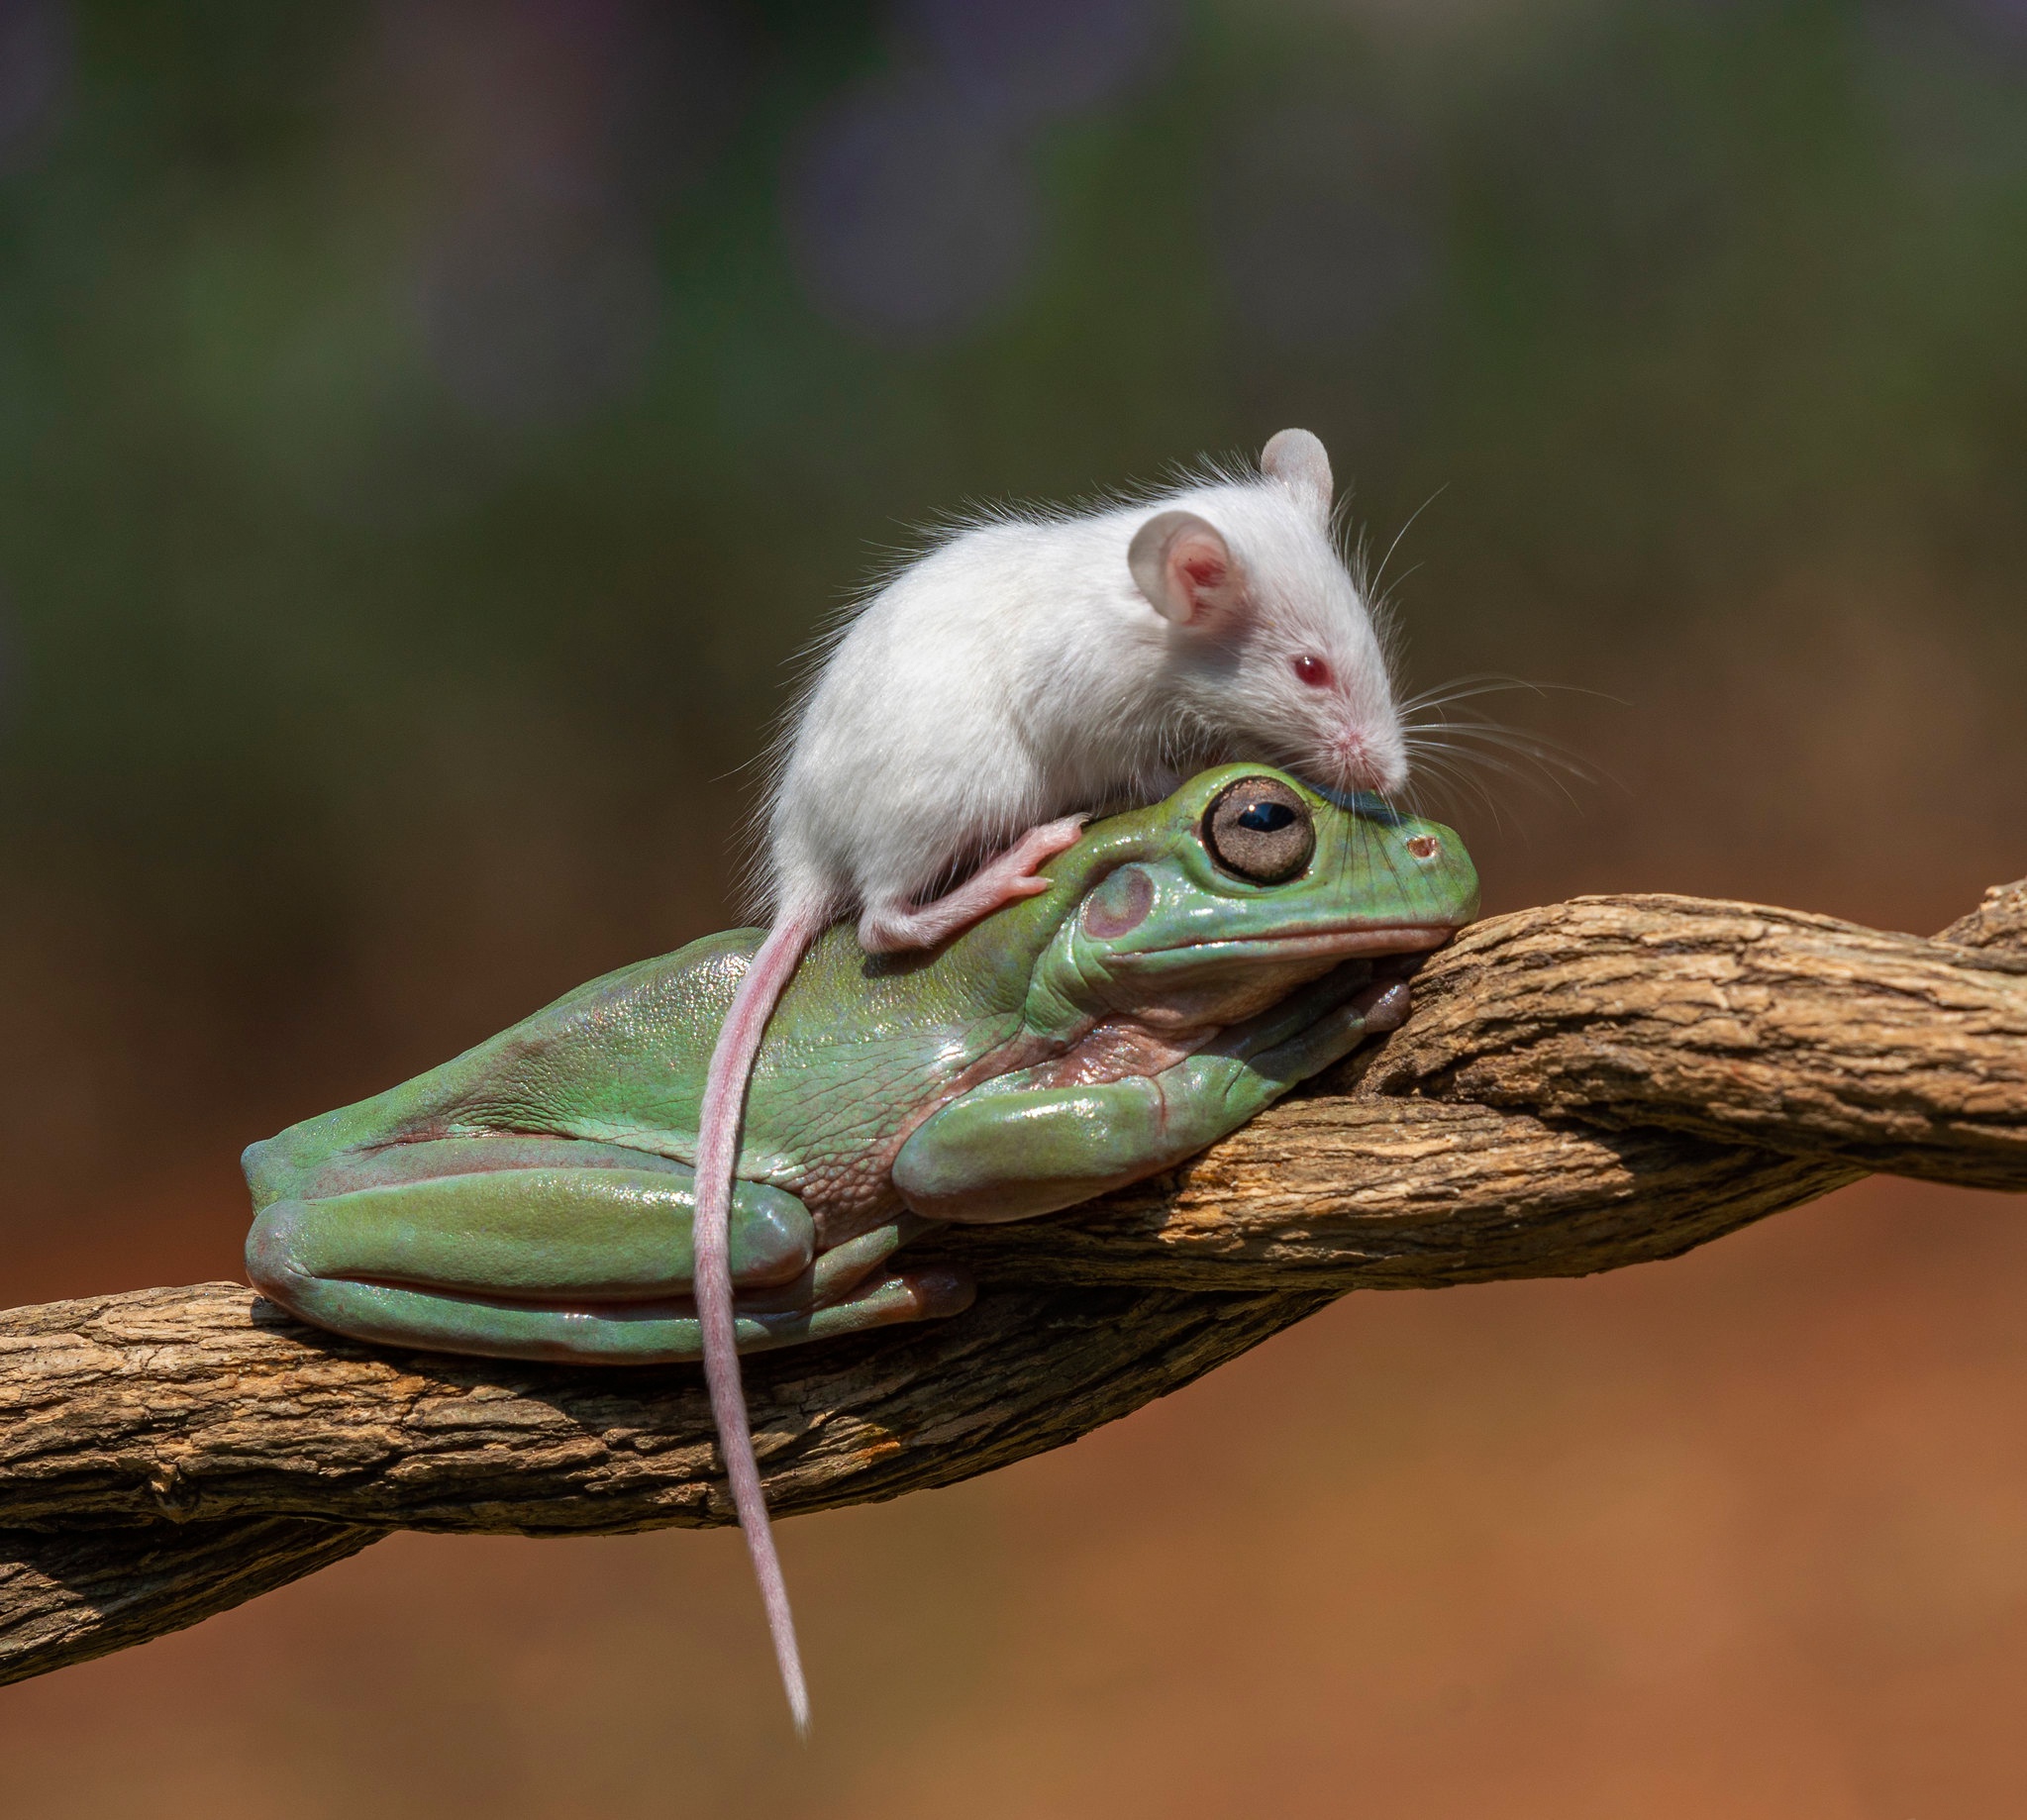 Cute White Rat Live Wallpaper  free download